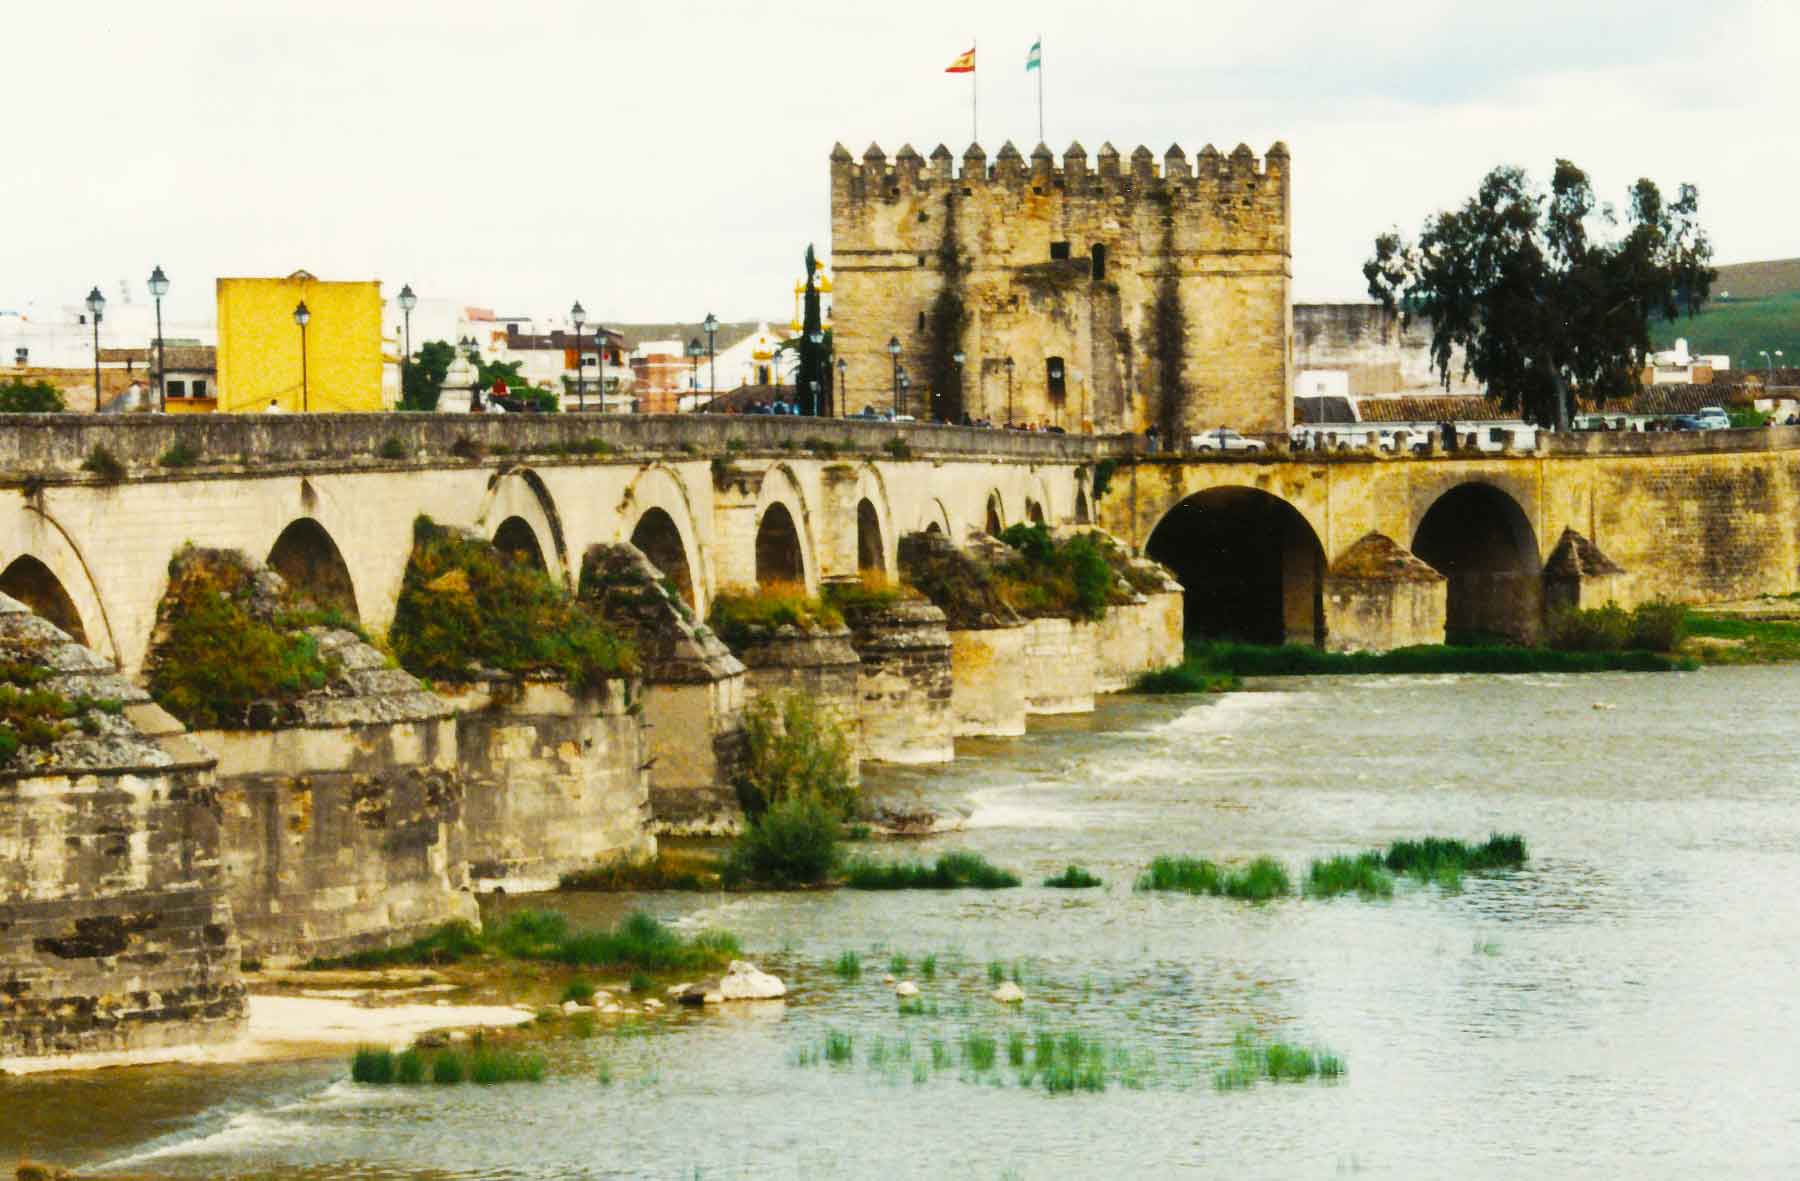 Cordoba - Roman Bridge - Spain - Steven Andrew Martin - Study Abroad Journal 1998